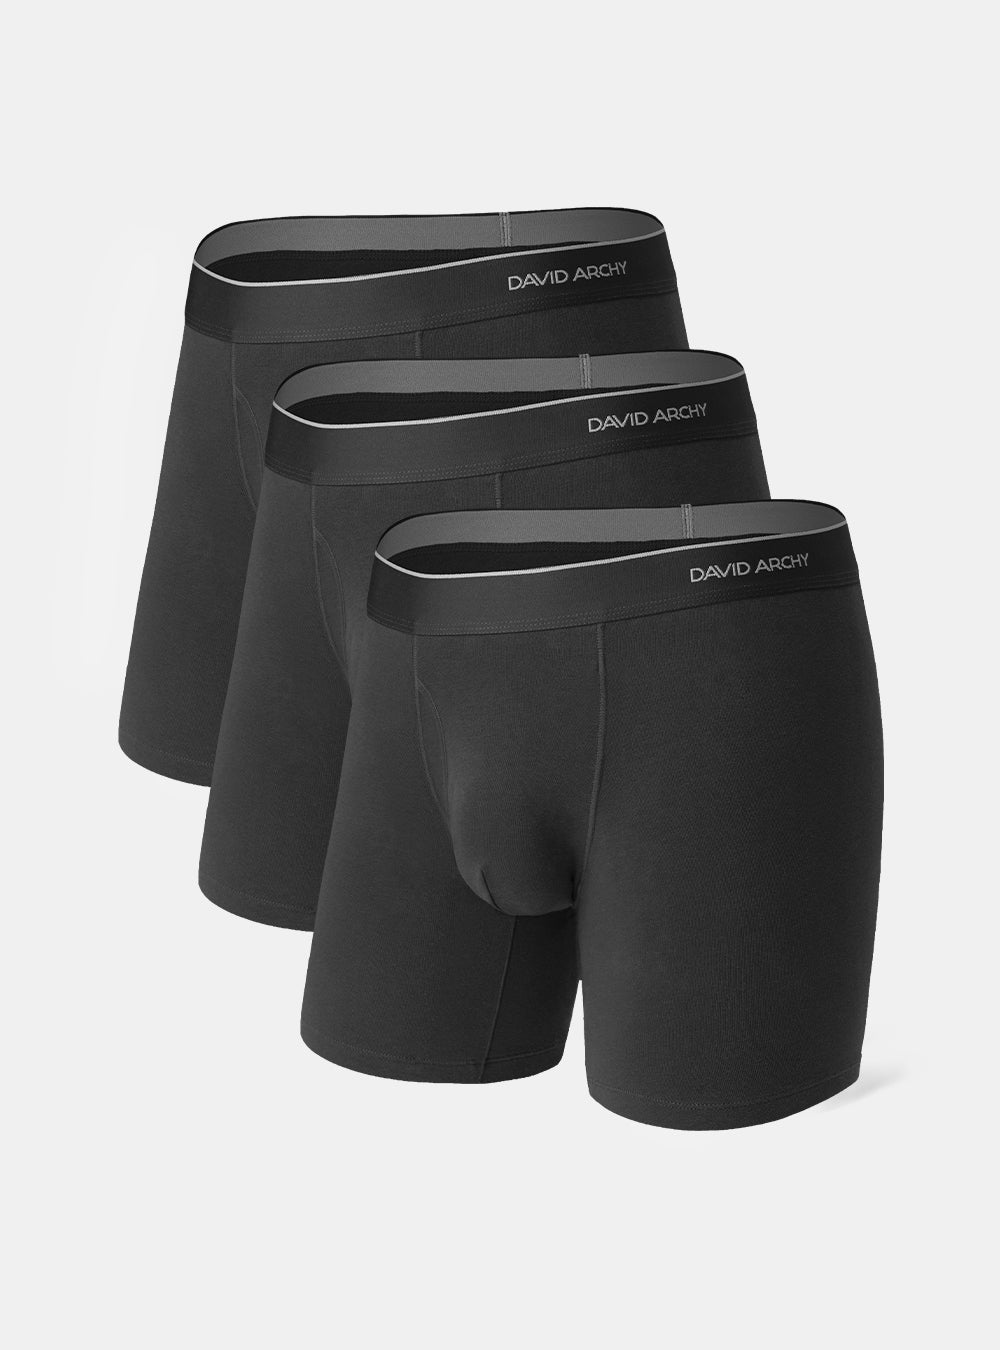 DAVID ARCHY Men's Soft Combed Cotton Pouch Underwear 6 Pack